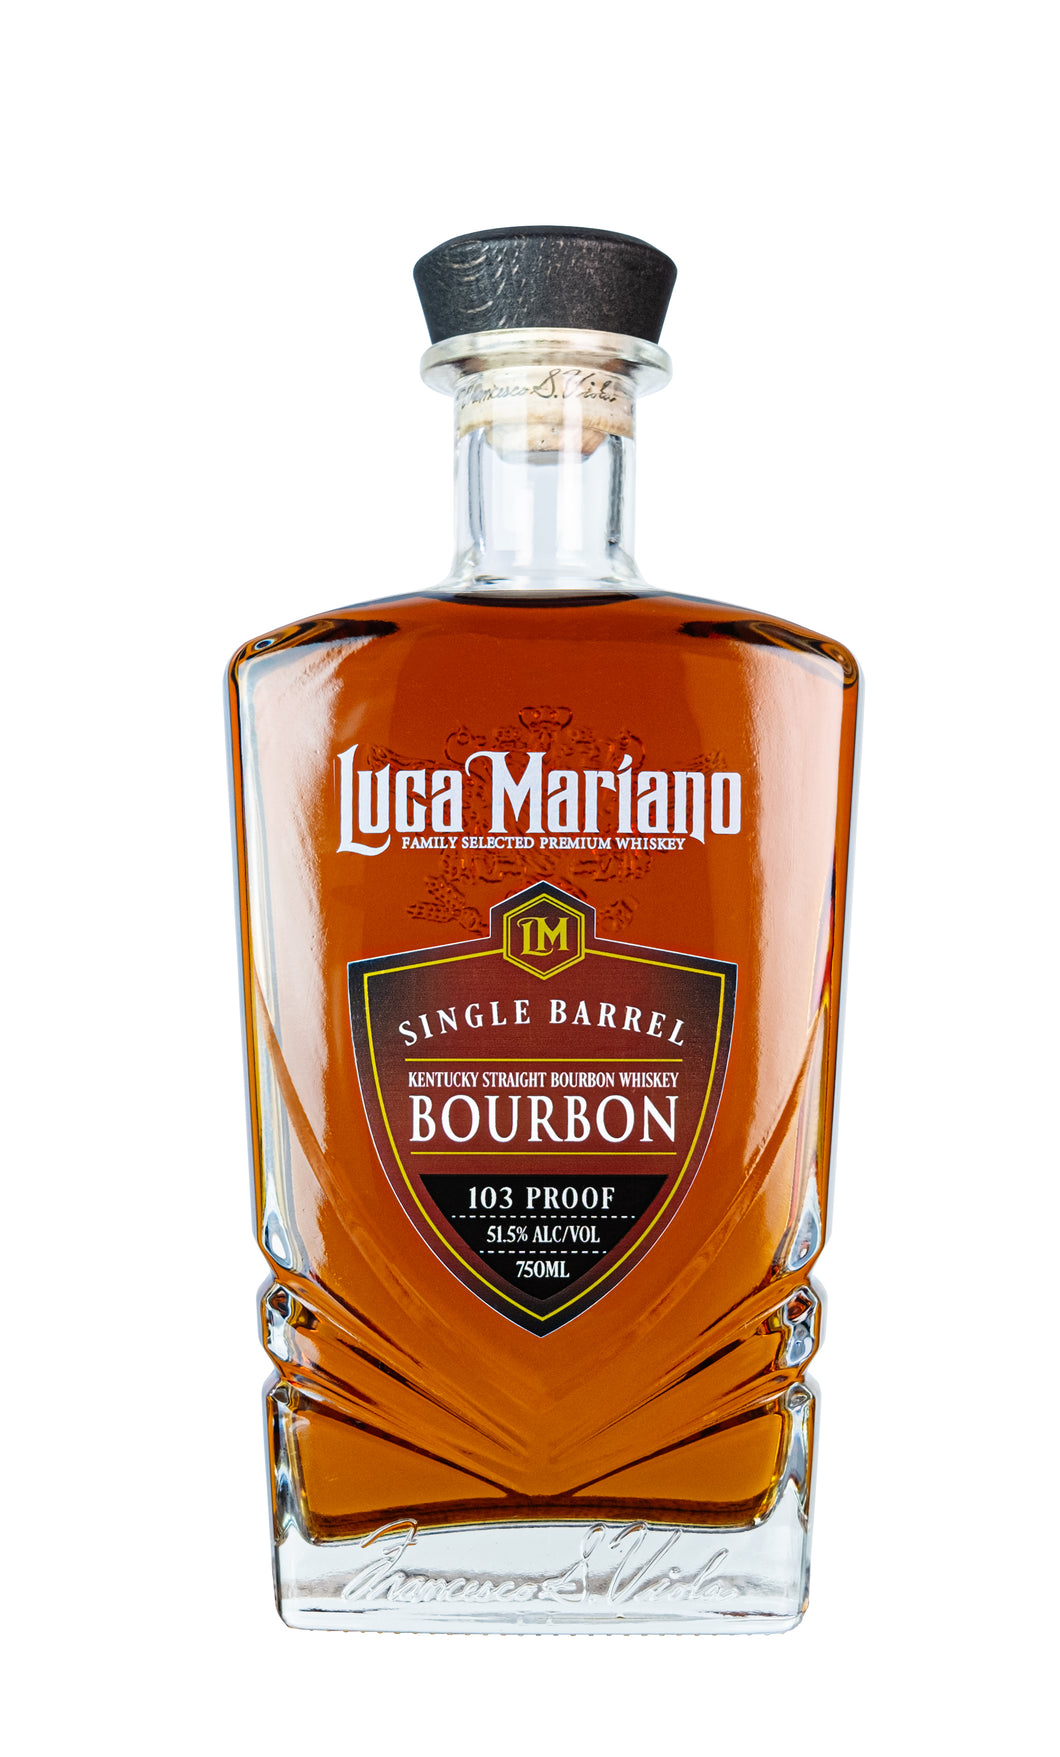 Luca Mariano Single Barrel Bourbon